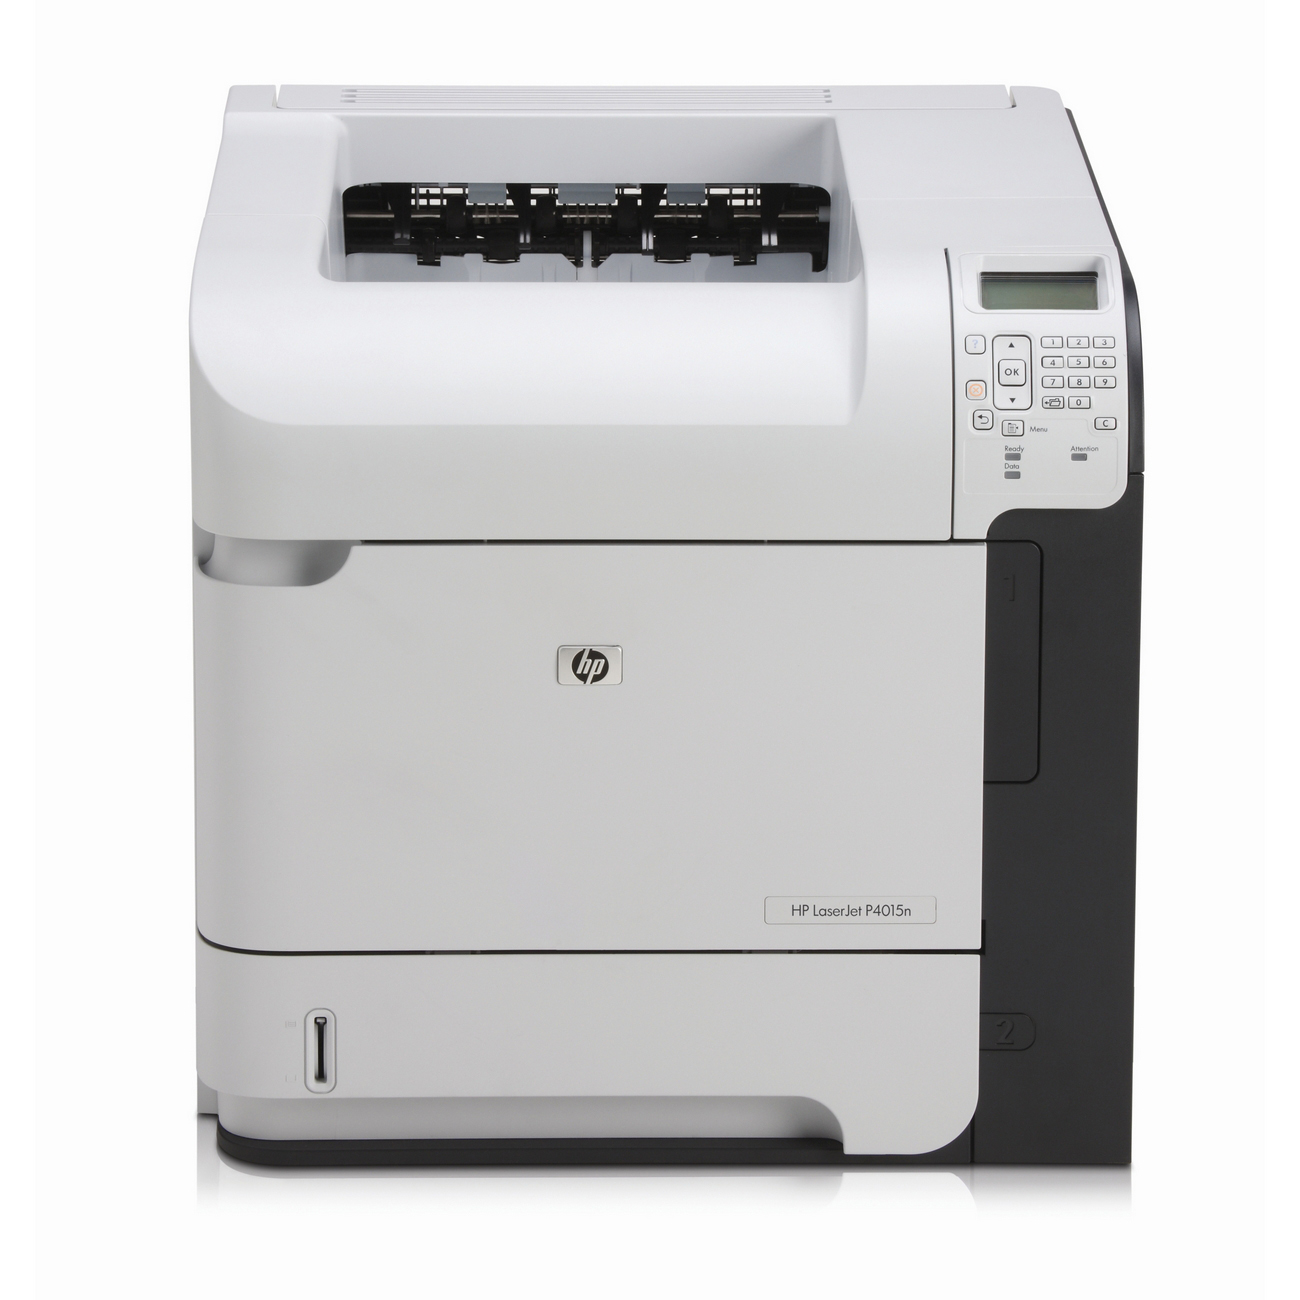 hp laserjet p4015 printer user manual